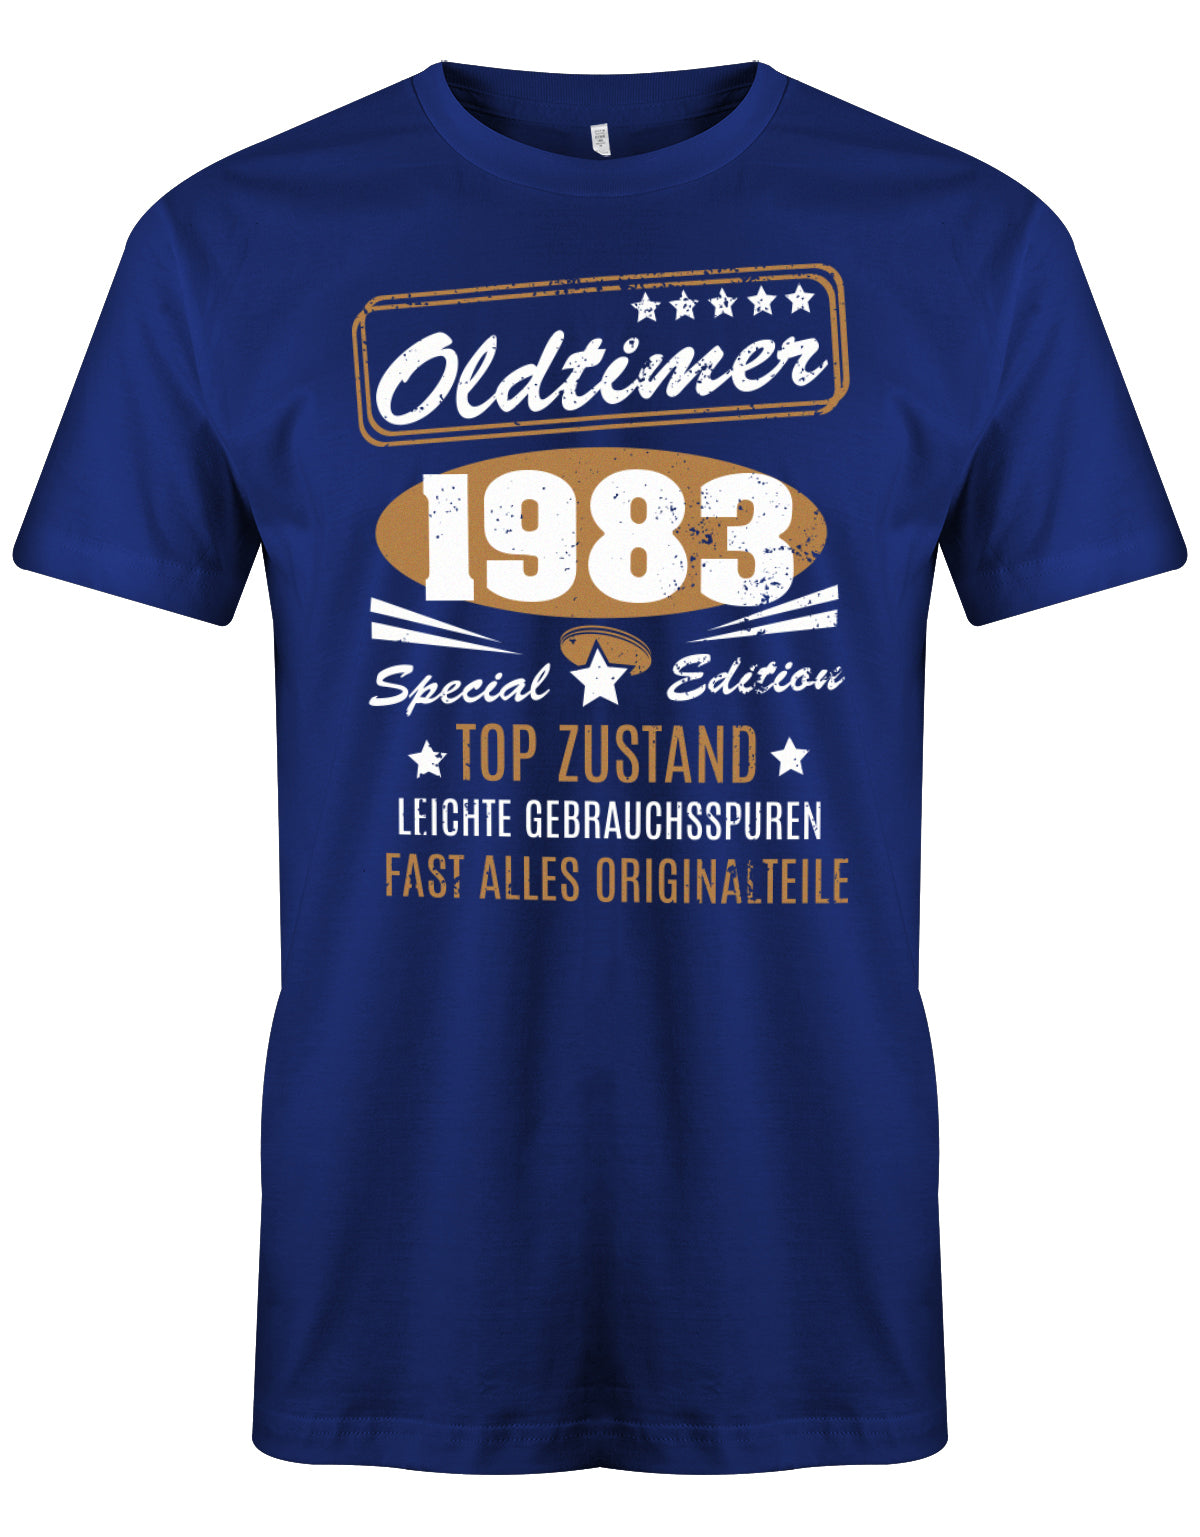 Oldtimer 1983 Special Edition Top Zustand - T-Shirt 40 Geburtstag Männer myShirtStore Royalblau